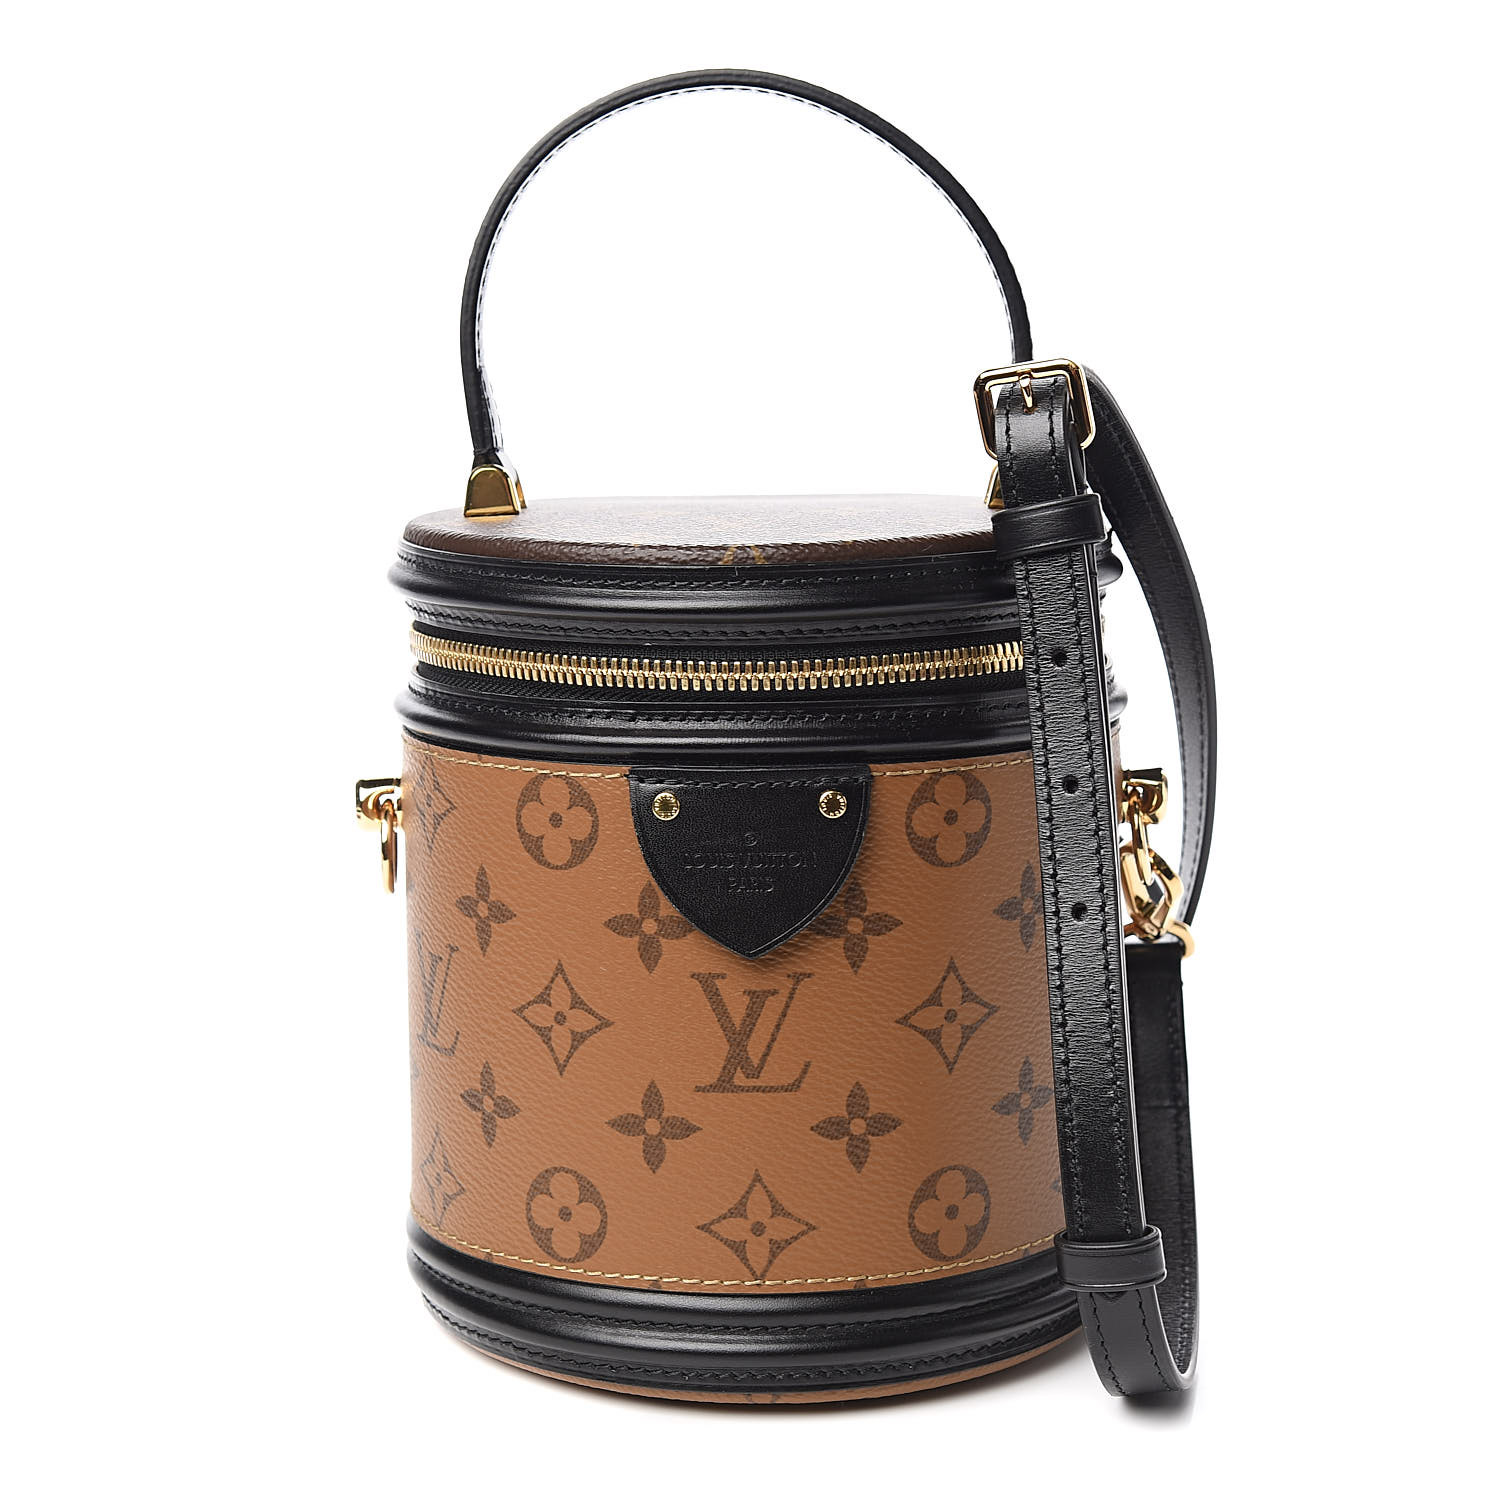 A Close Look at the Louis Vuitton Cannes Bag - PurseBlog